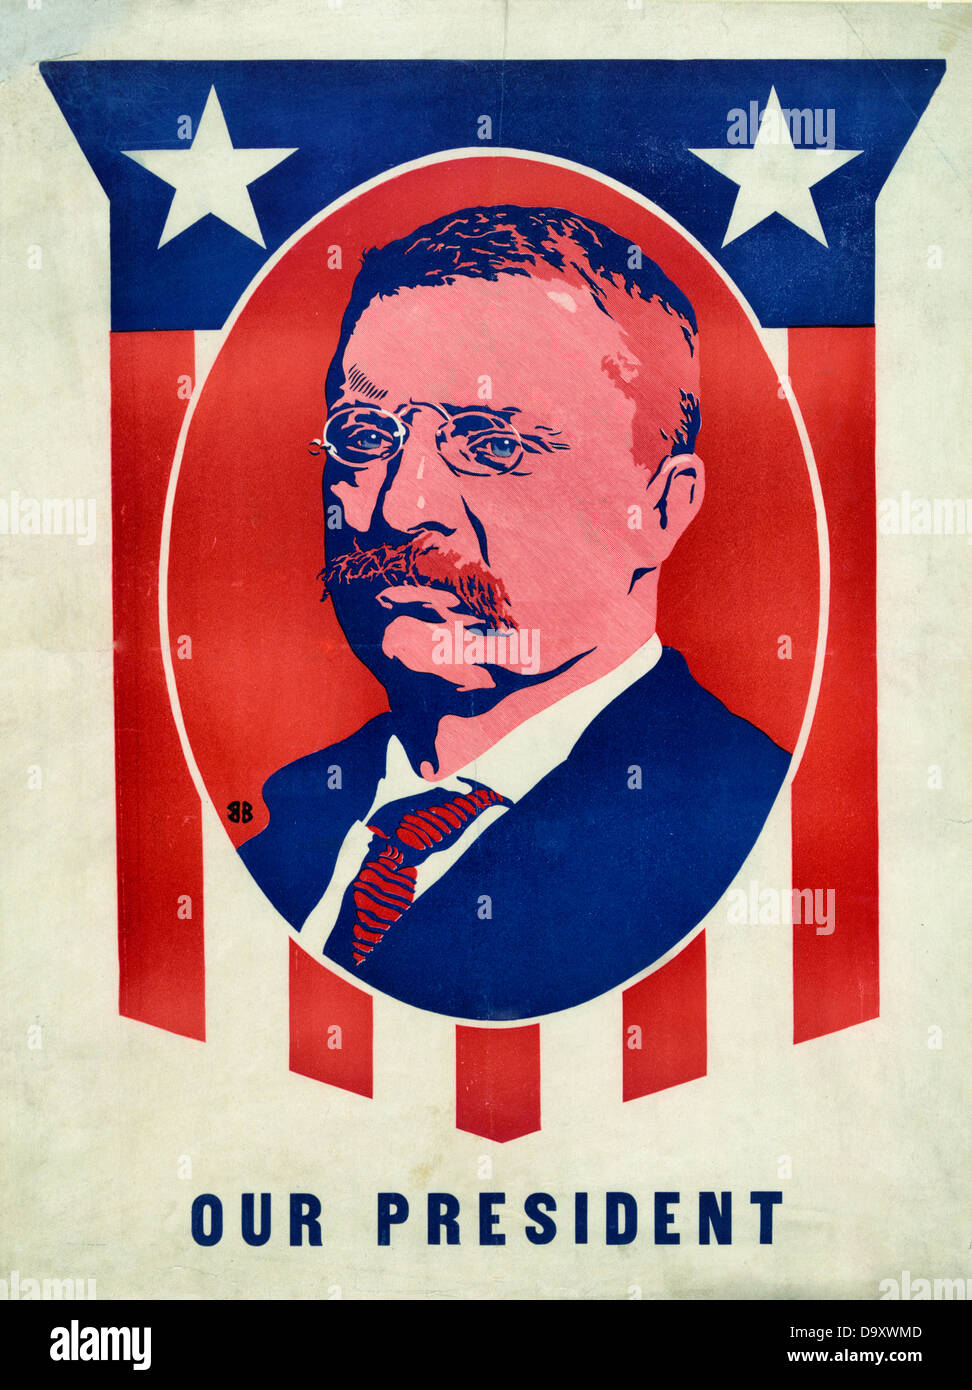 Roosevelt - unser Präsident. Banner für Theodore Roosevelt, USA Präsident 1901-1909 Stockfoto